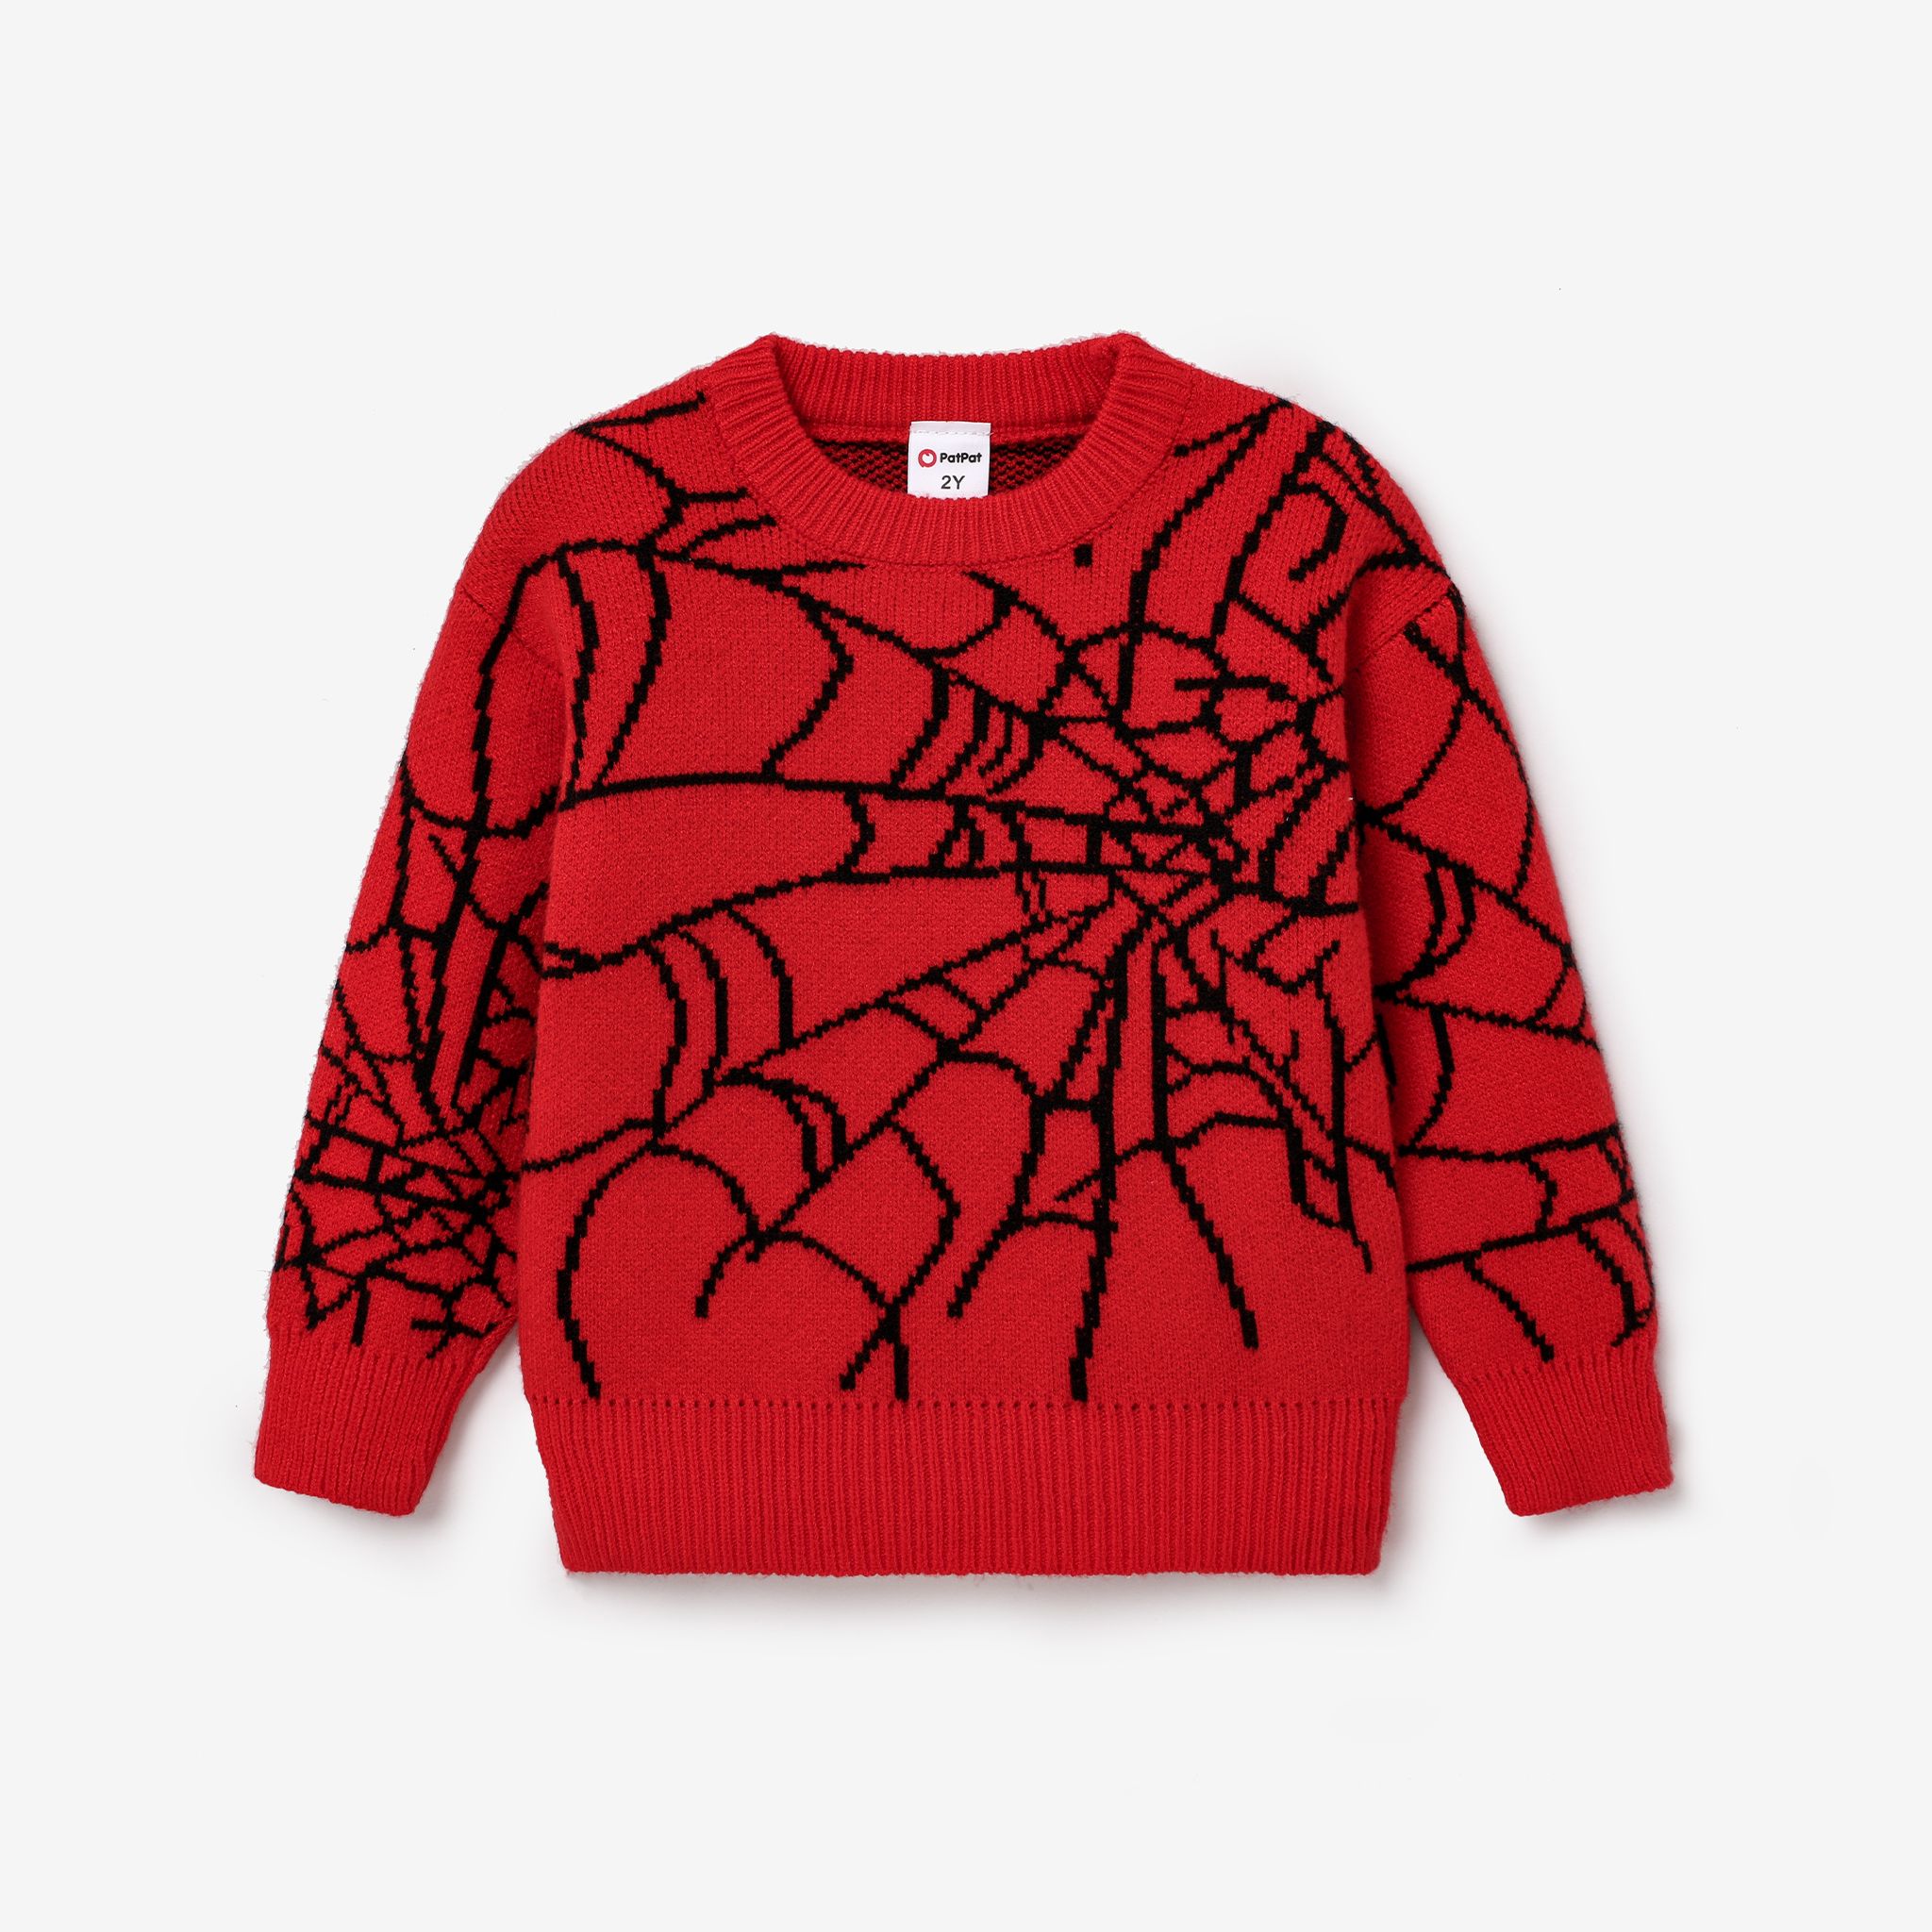 Toddler/Kid Boy Geometric Spider Web Design Pattern Oversized Sweater